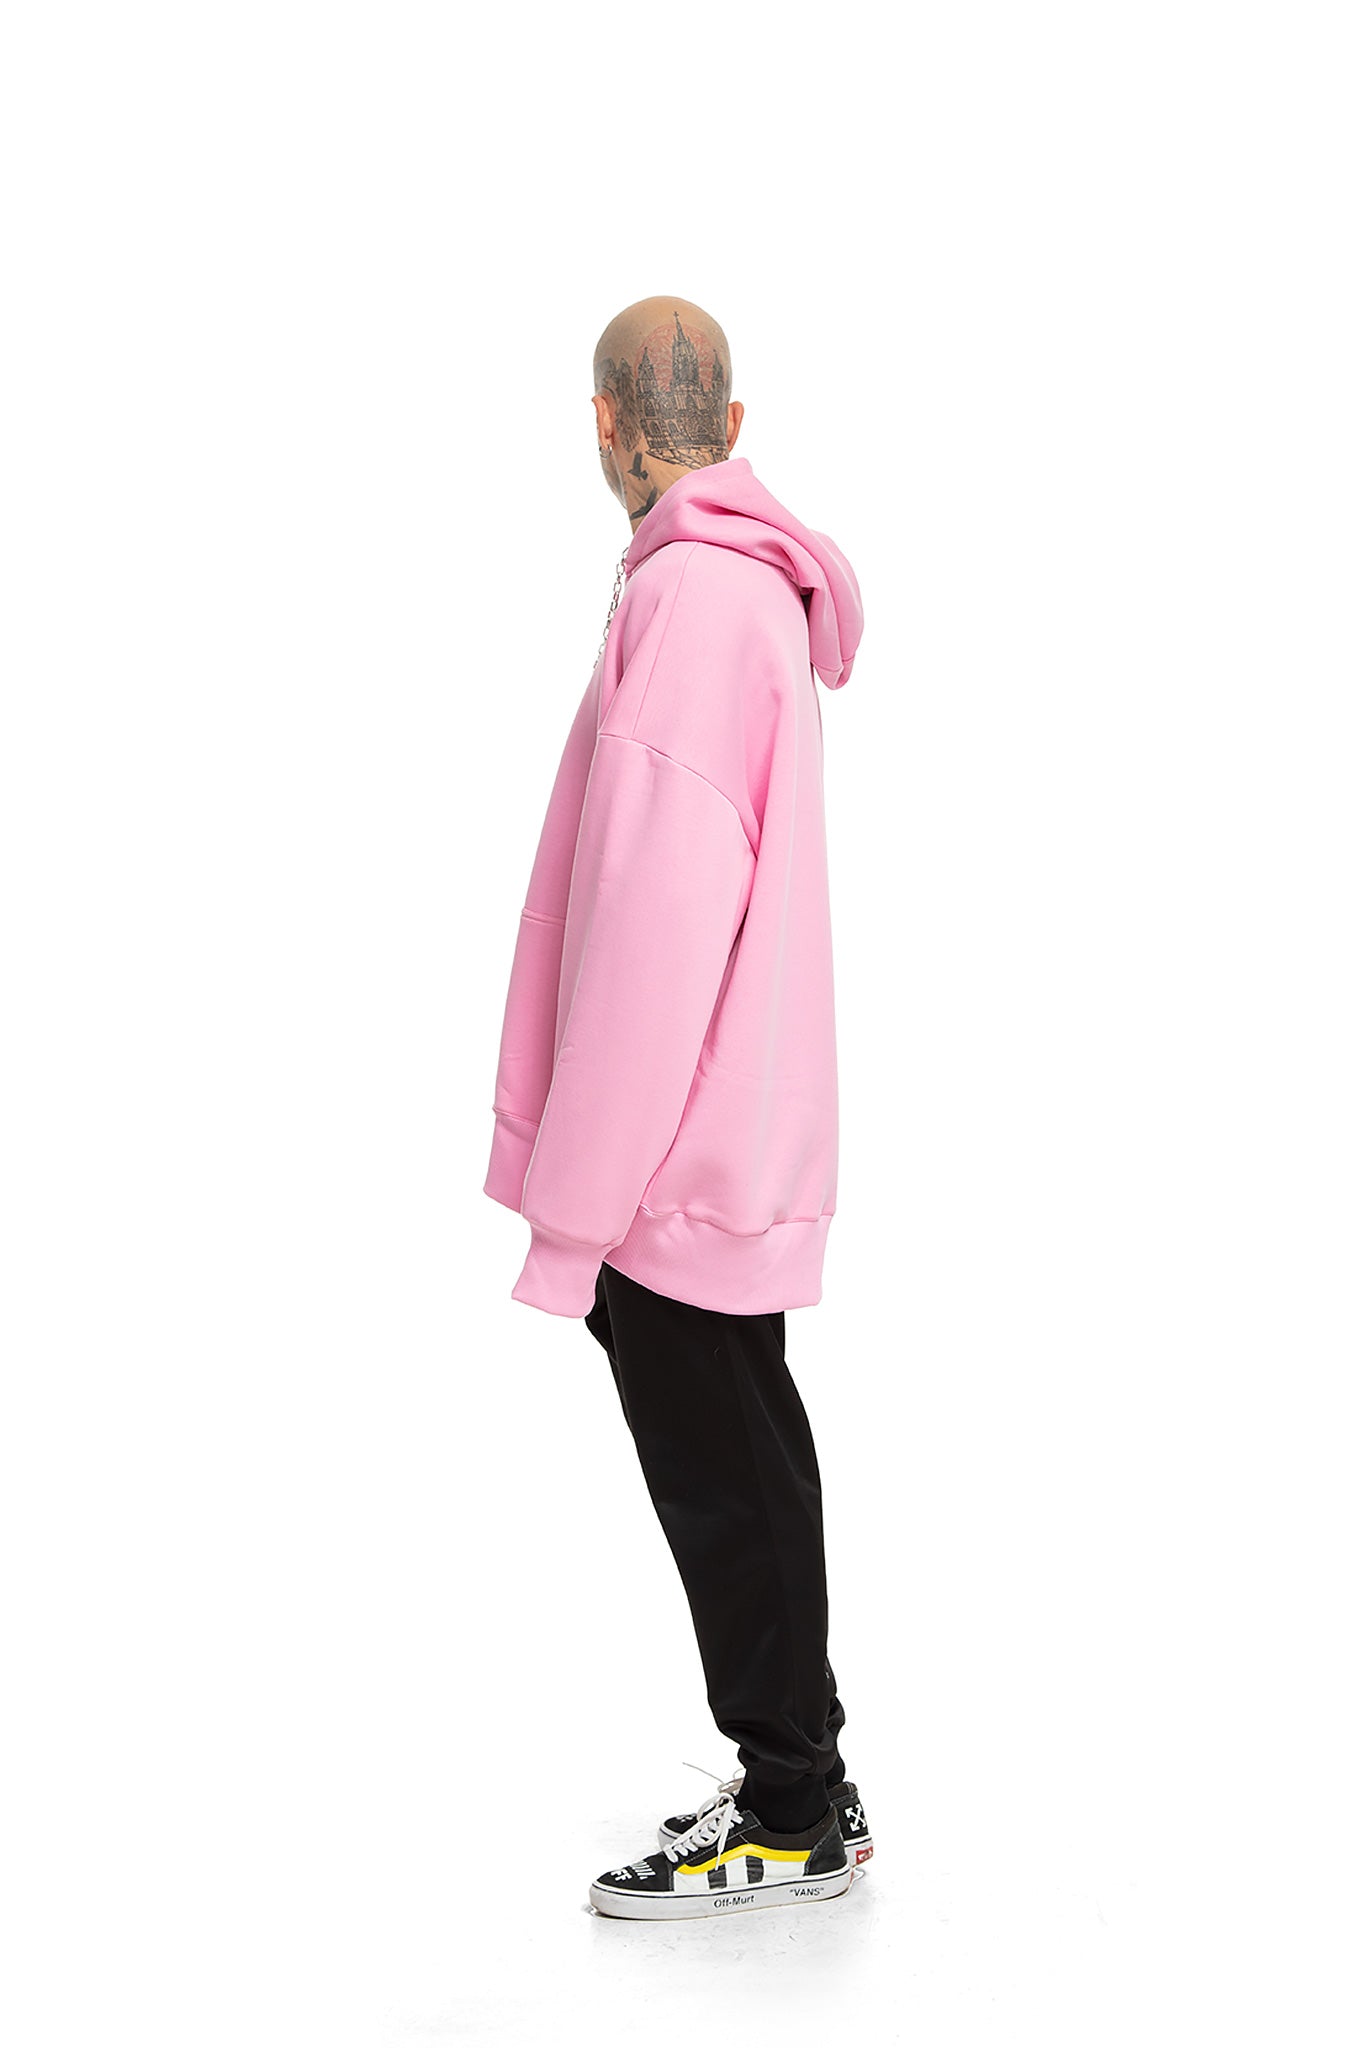 Super Oversized [Dark Pink] Hoodie